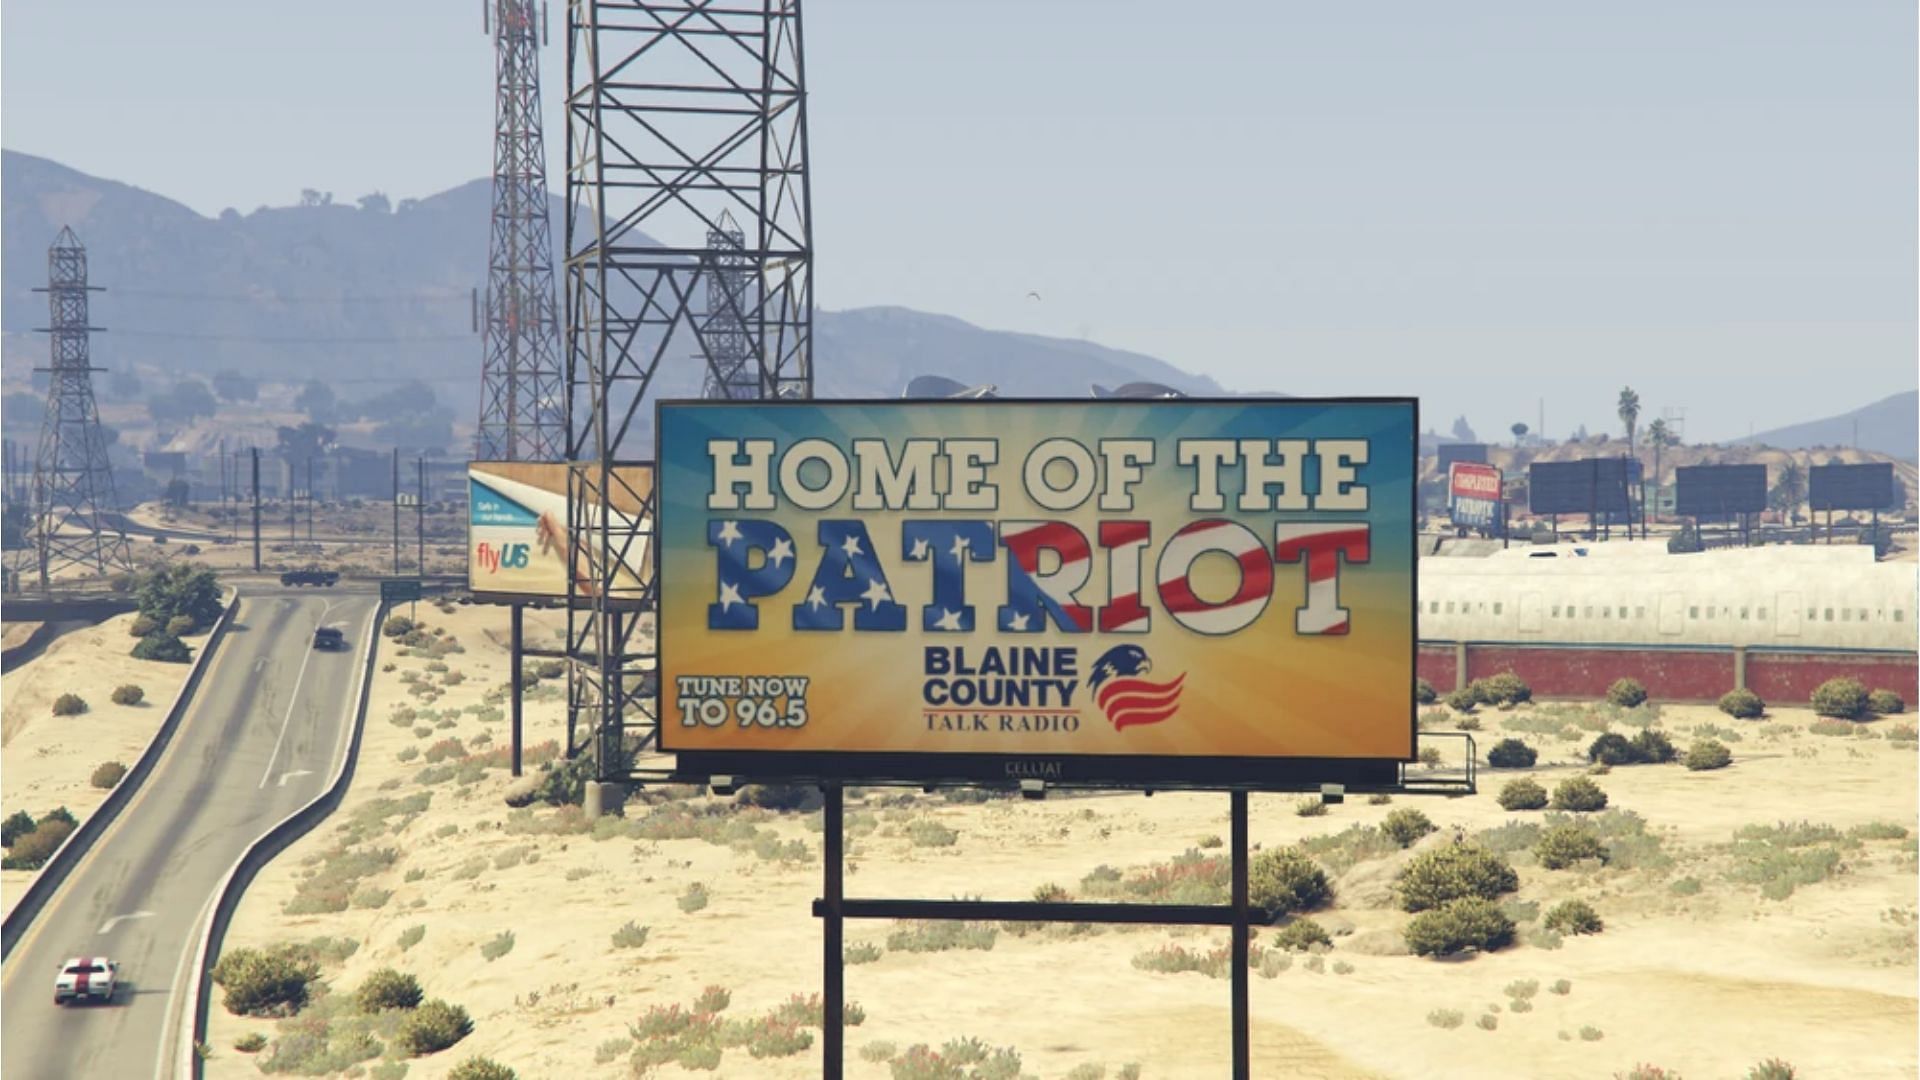 A billboard of the Blaine County Radio station in Grand Theft Auto 5. (Image via GTA Wiki)